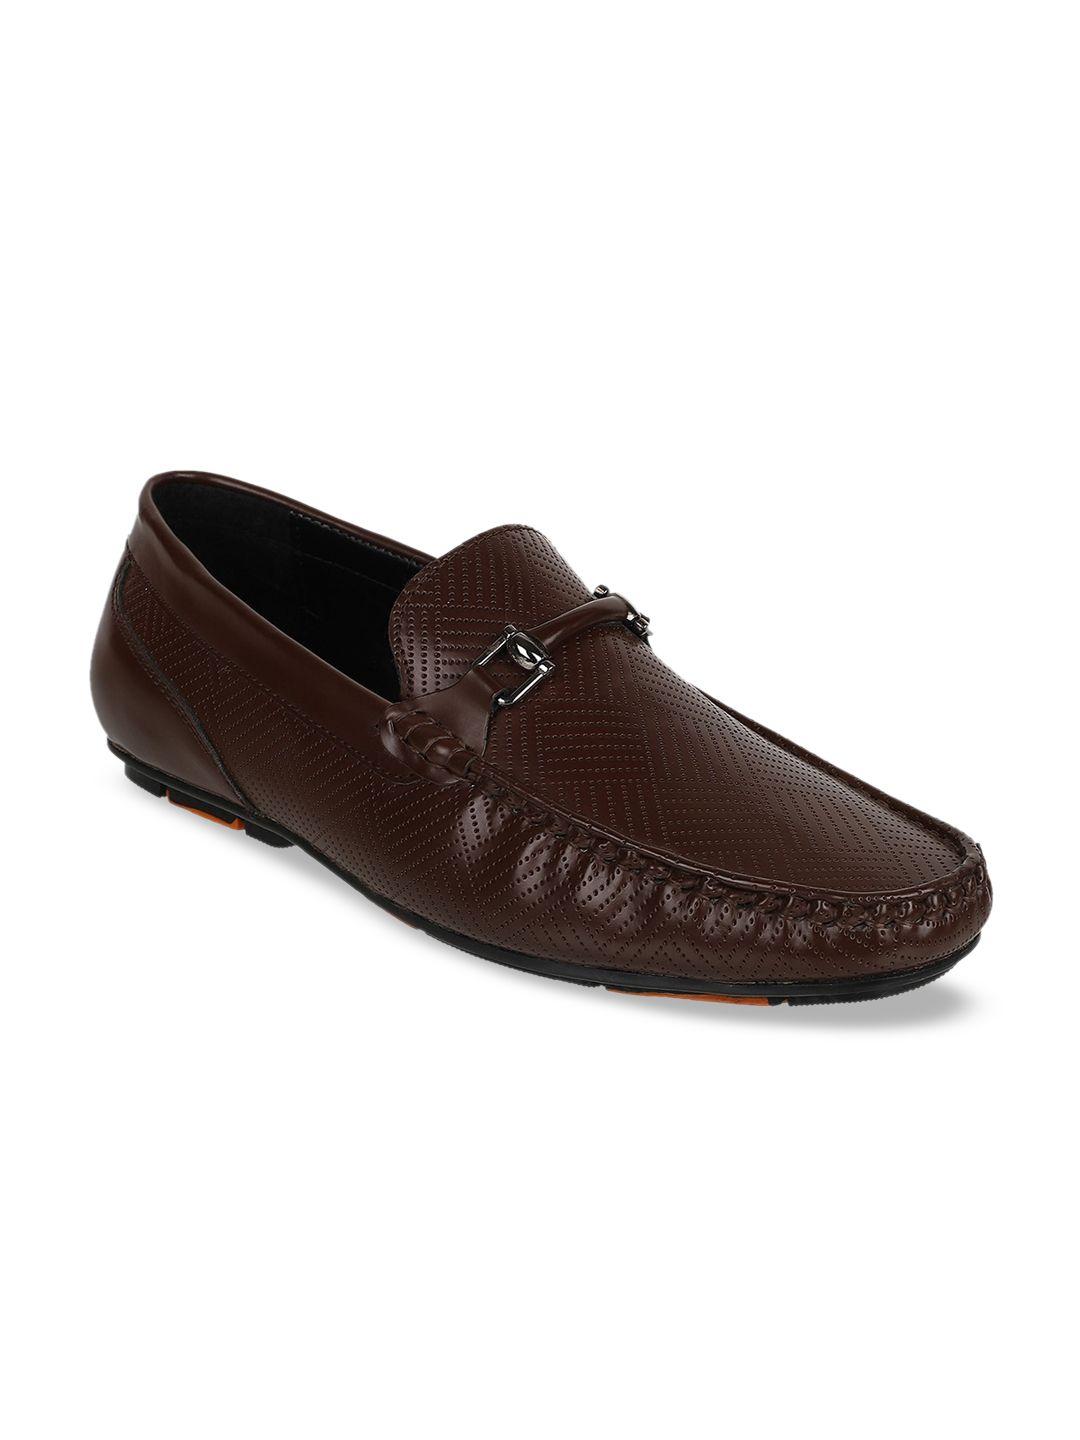 carlton london men brown textured loafers